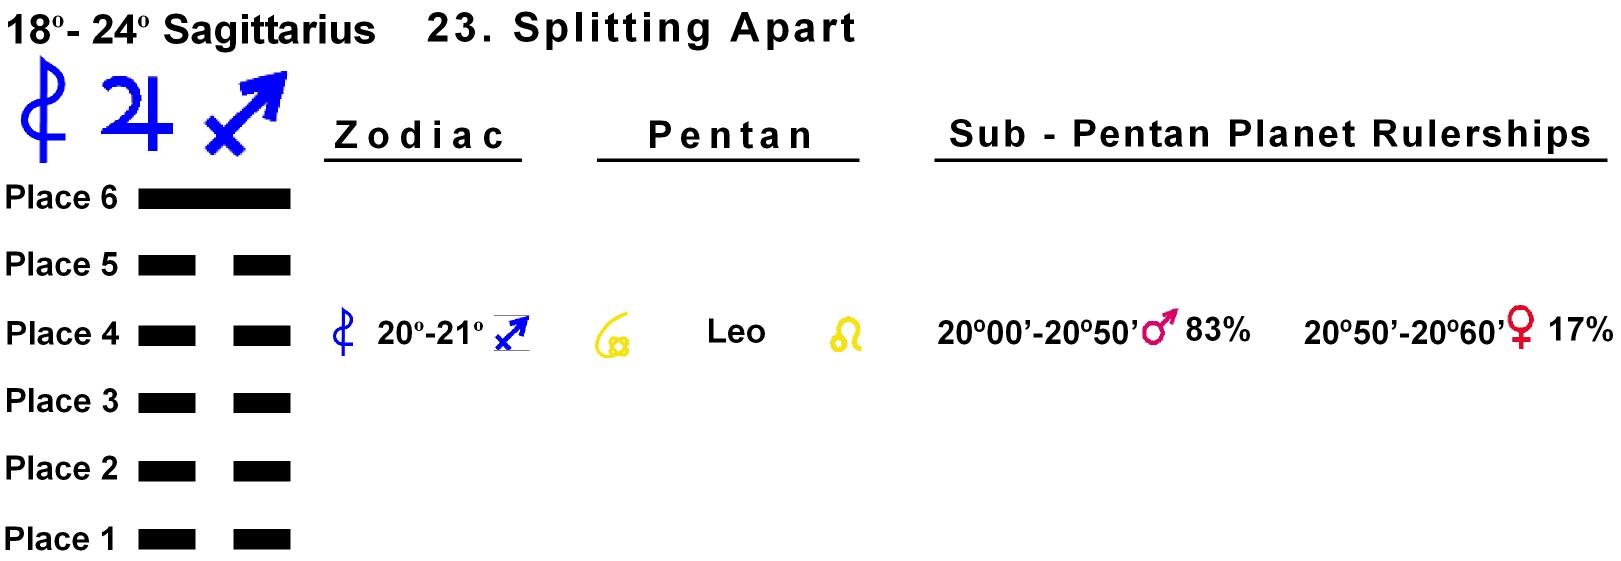 Pent-lines-09SA 20-21 Hx-23 Splitting Apart